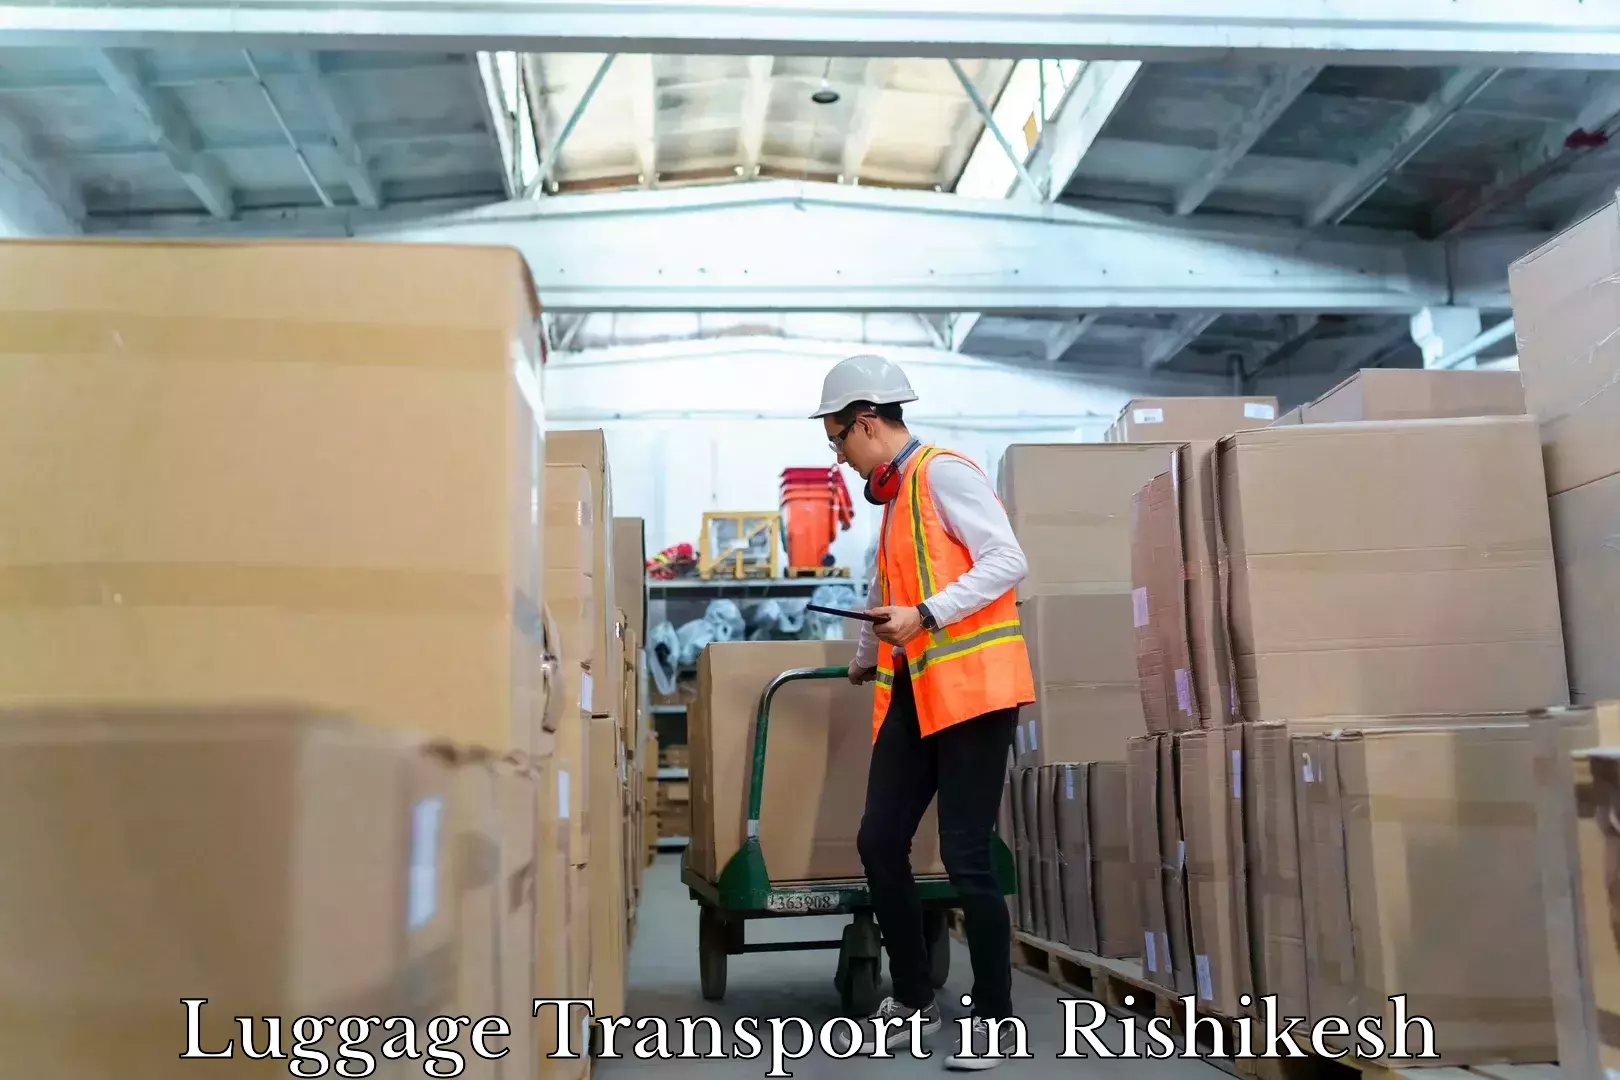 Baggage transport technology in Rishikesh